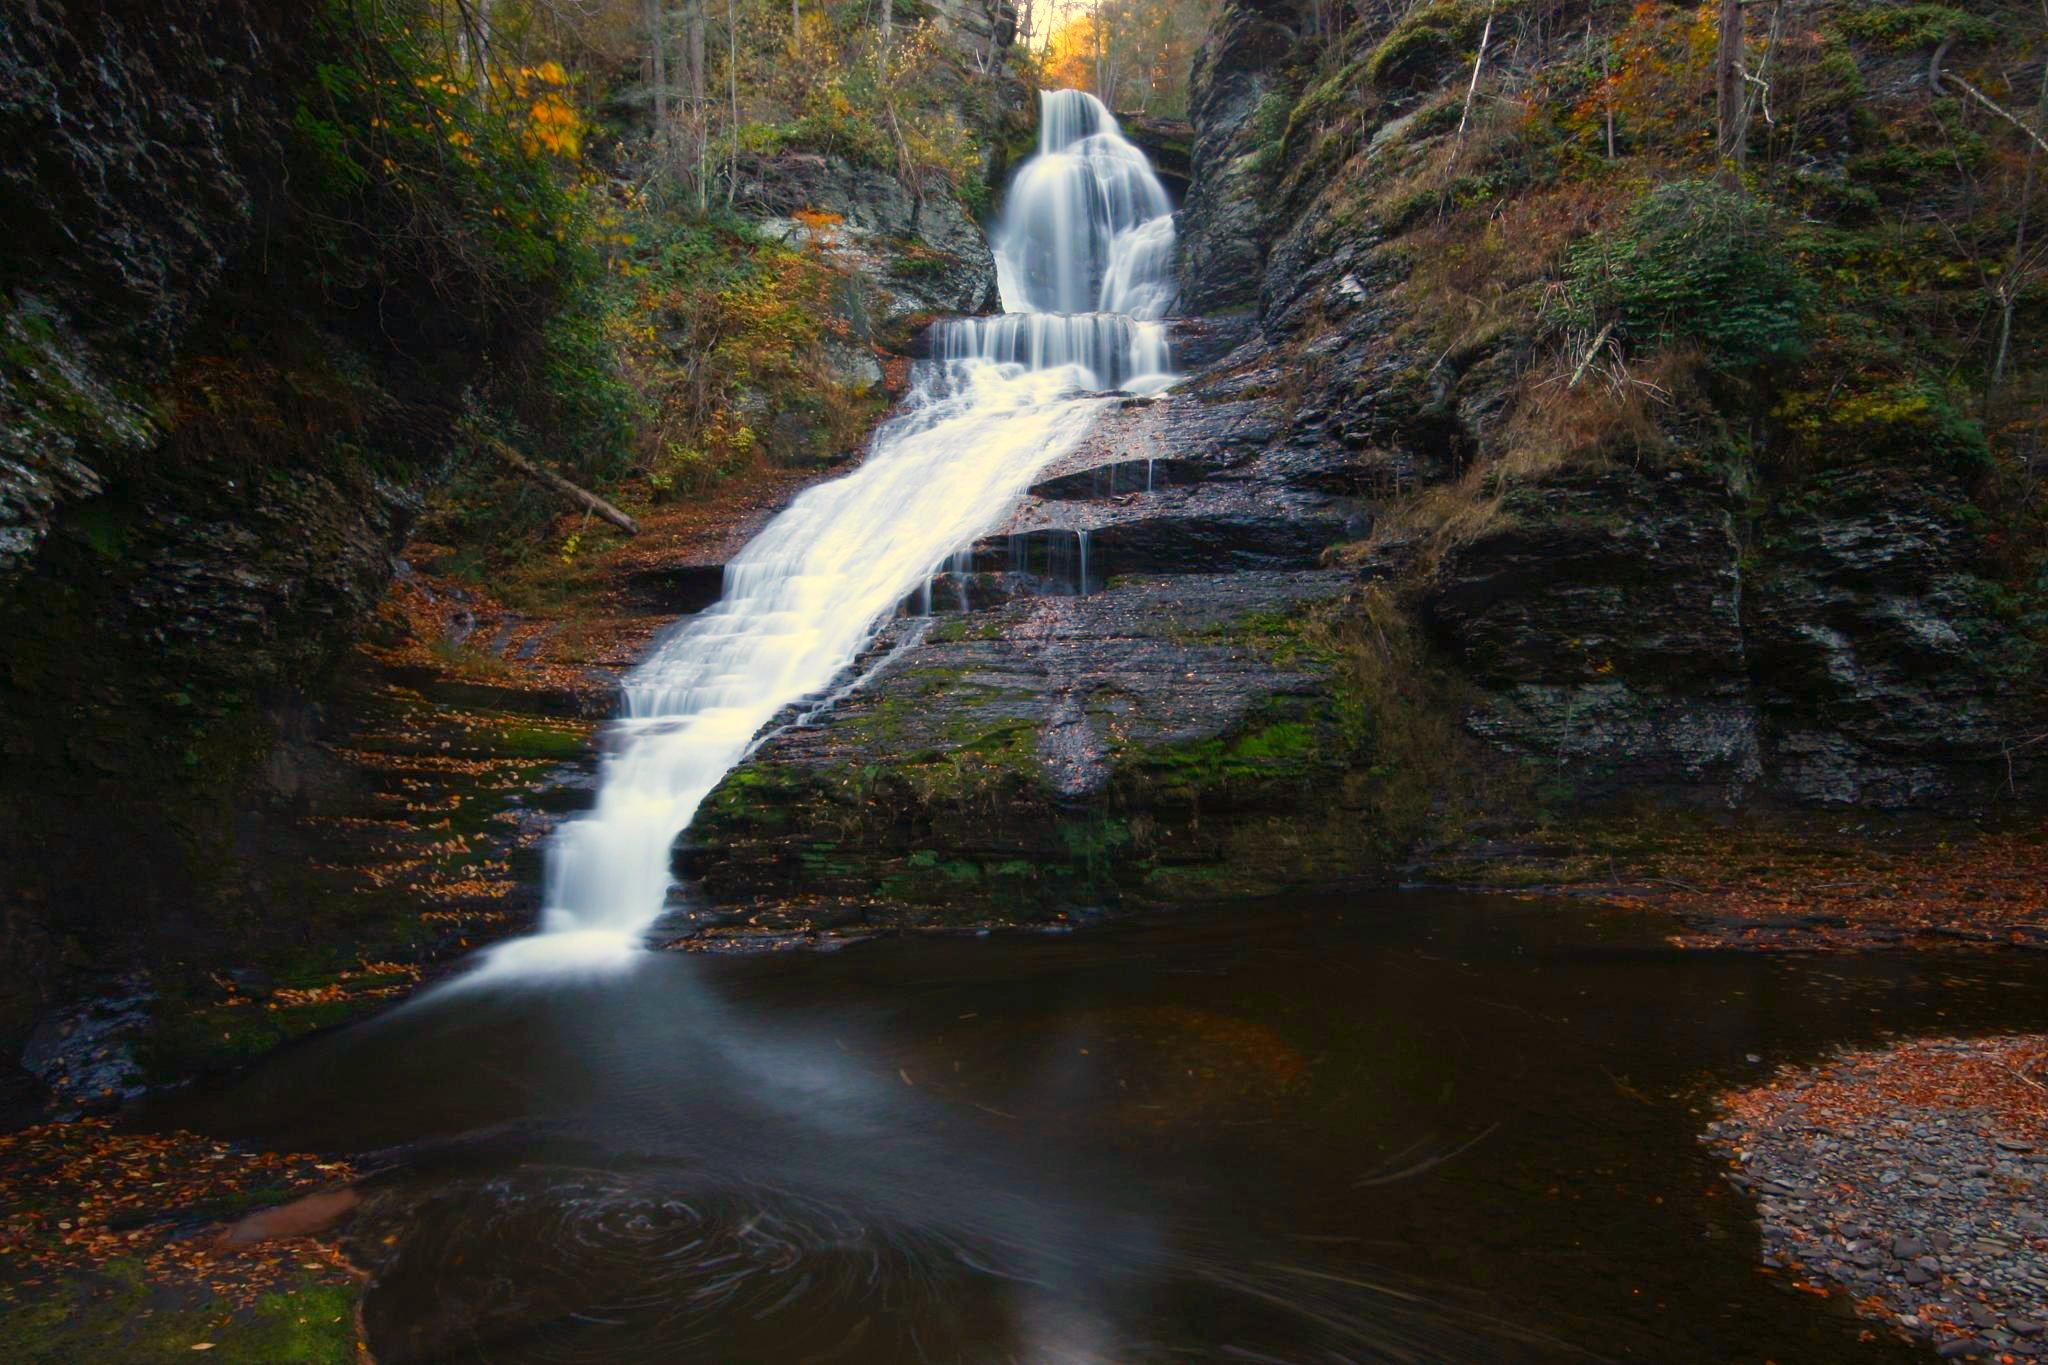 Pocono Mountains Scenic Hiking and Waterfall Photo Roundup